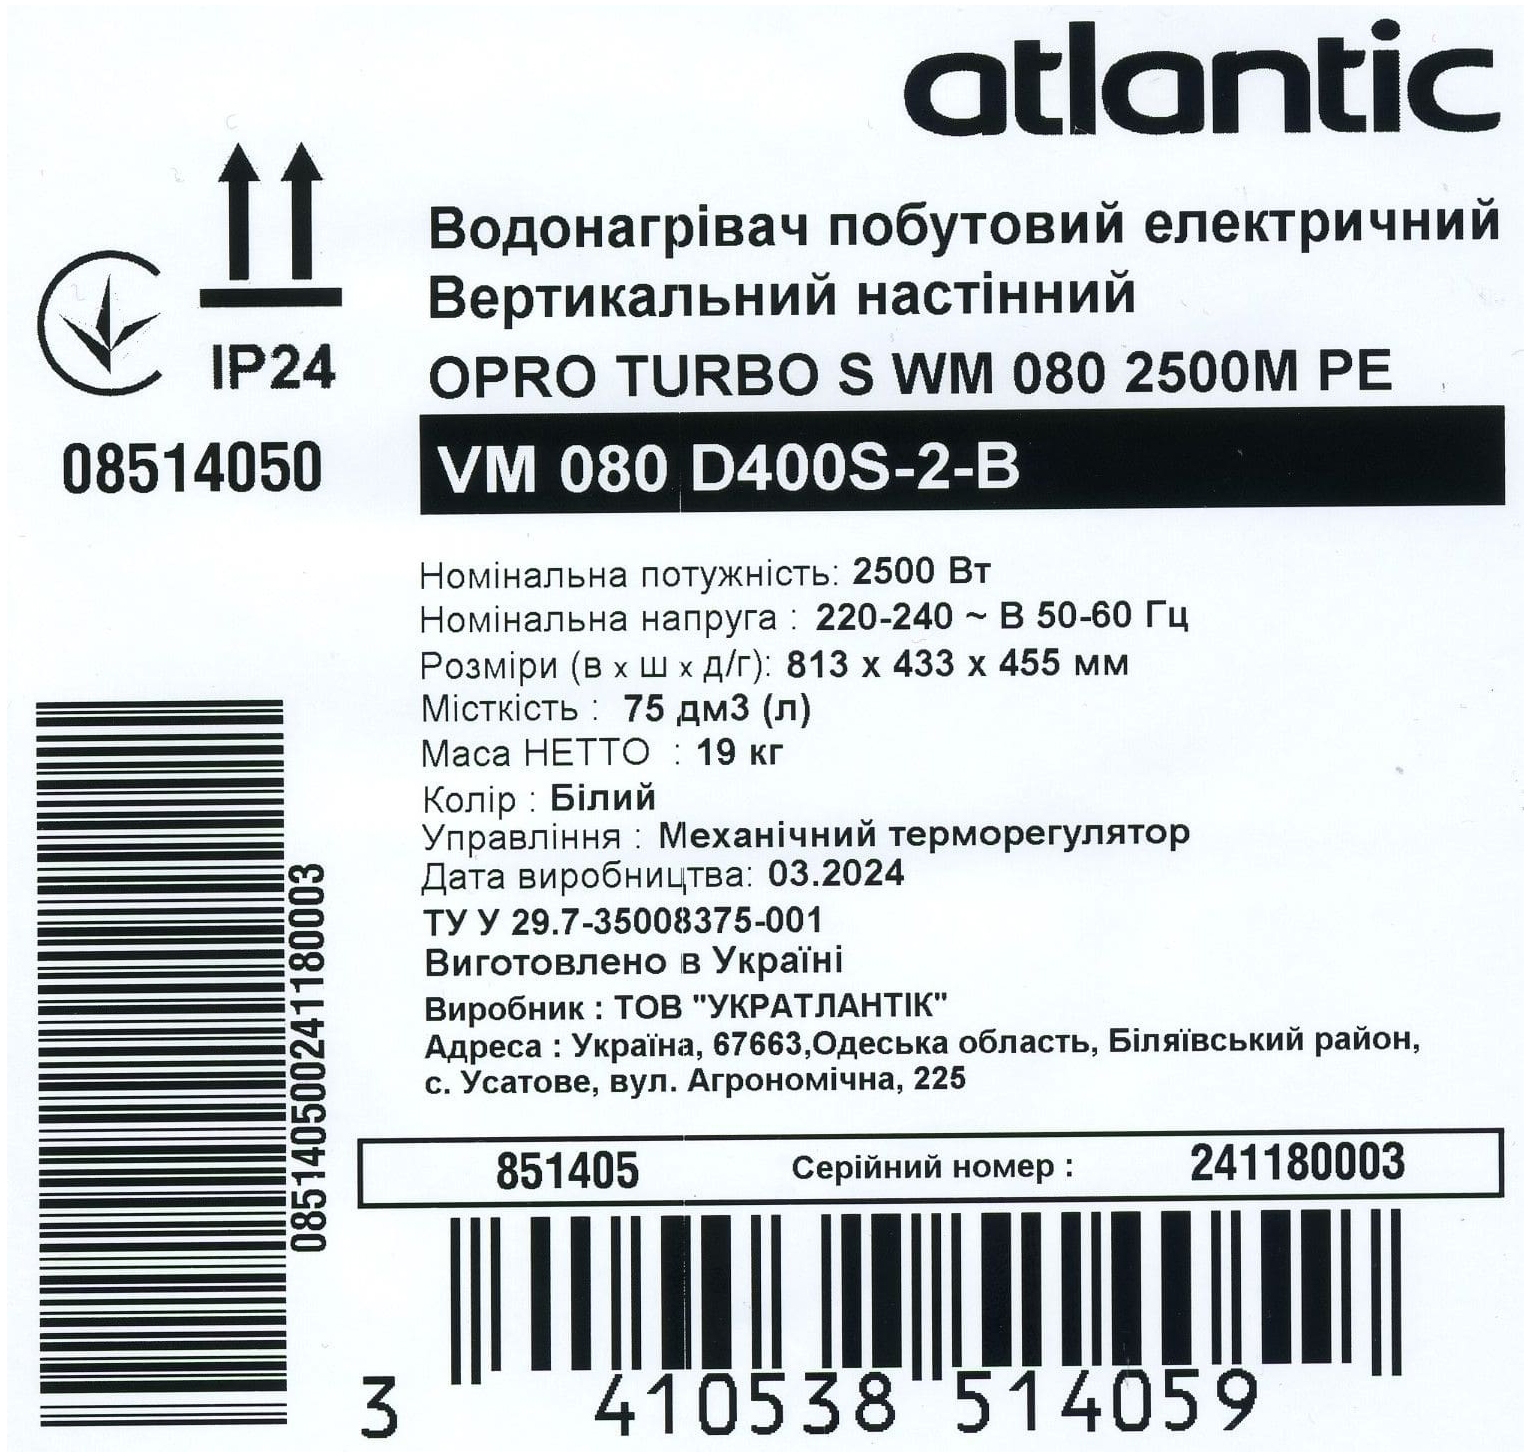 Atlantic Opro Turbo VM 080 D400S-2-B (2500W) в магазине в Киеве - фото 10